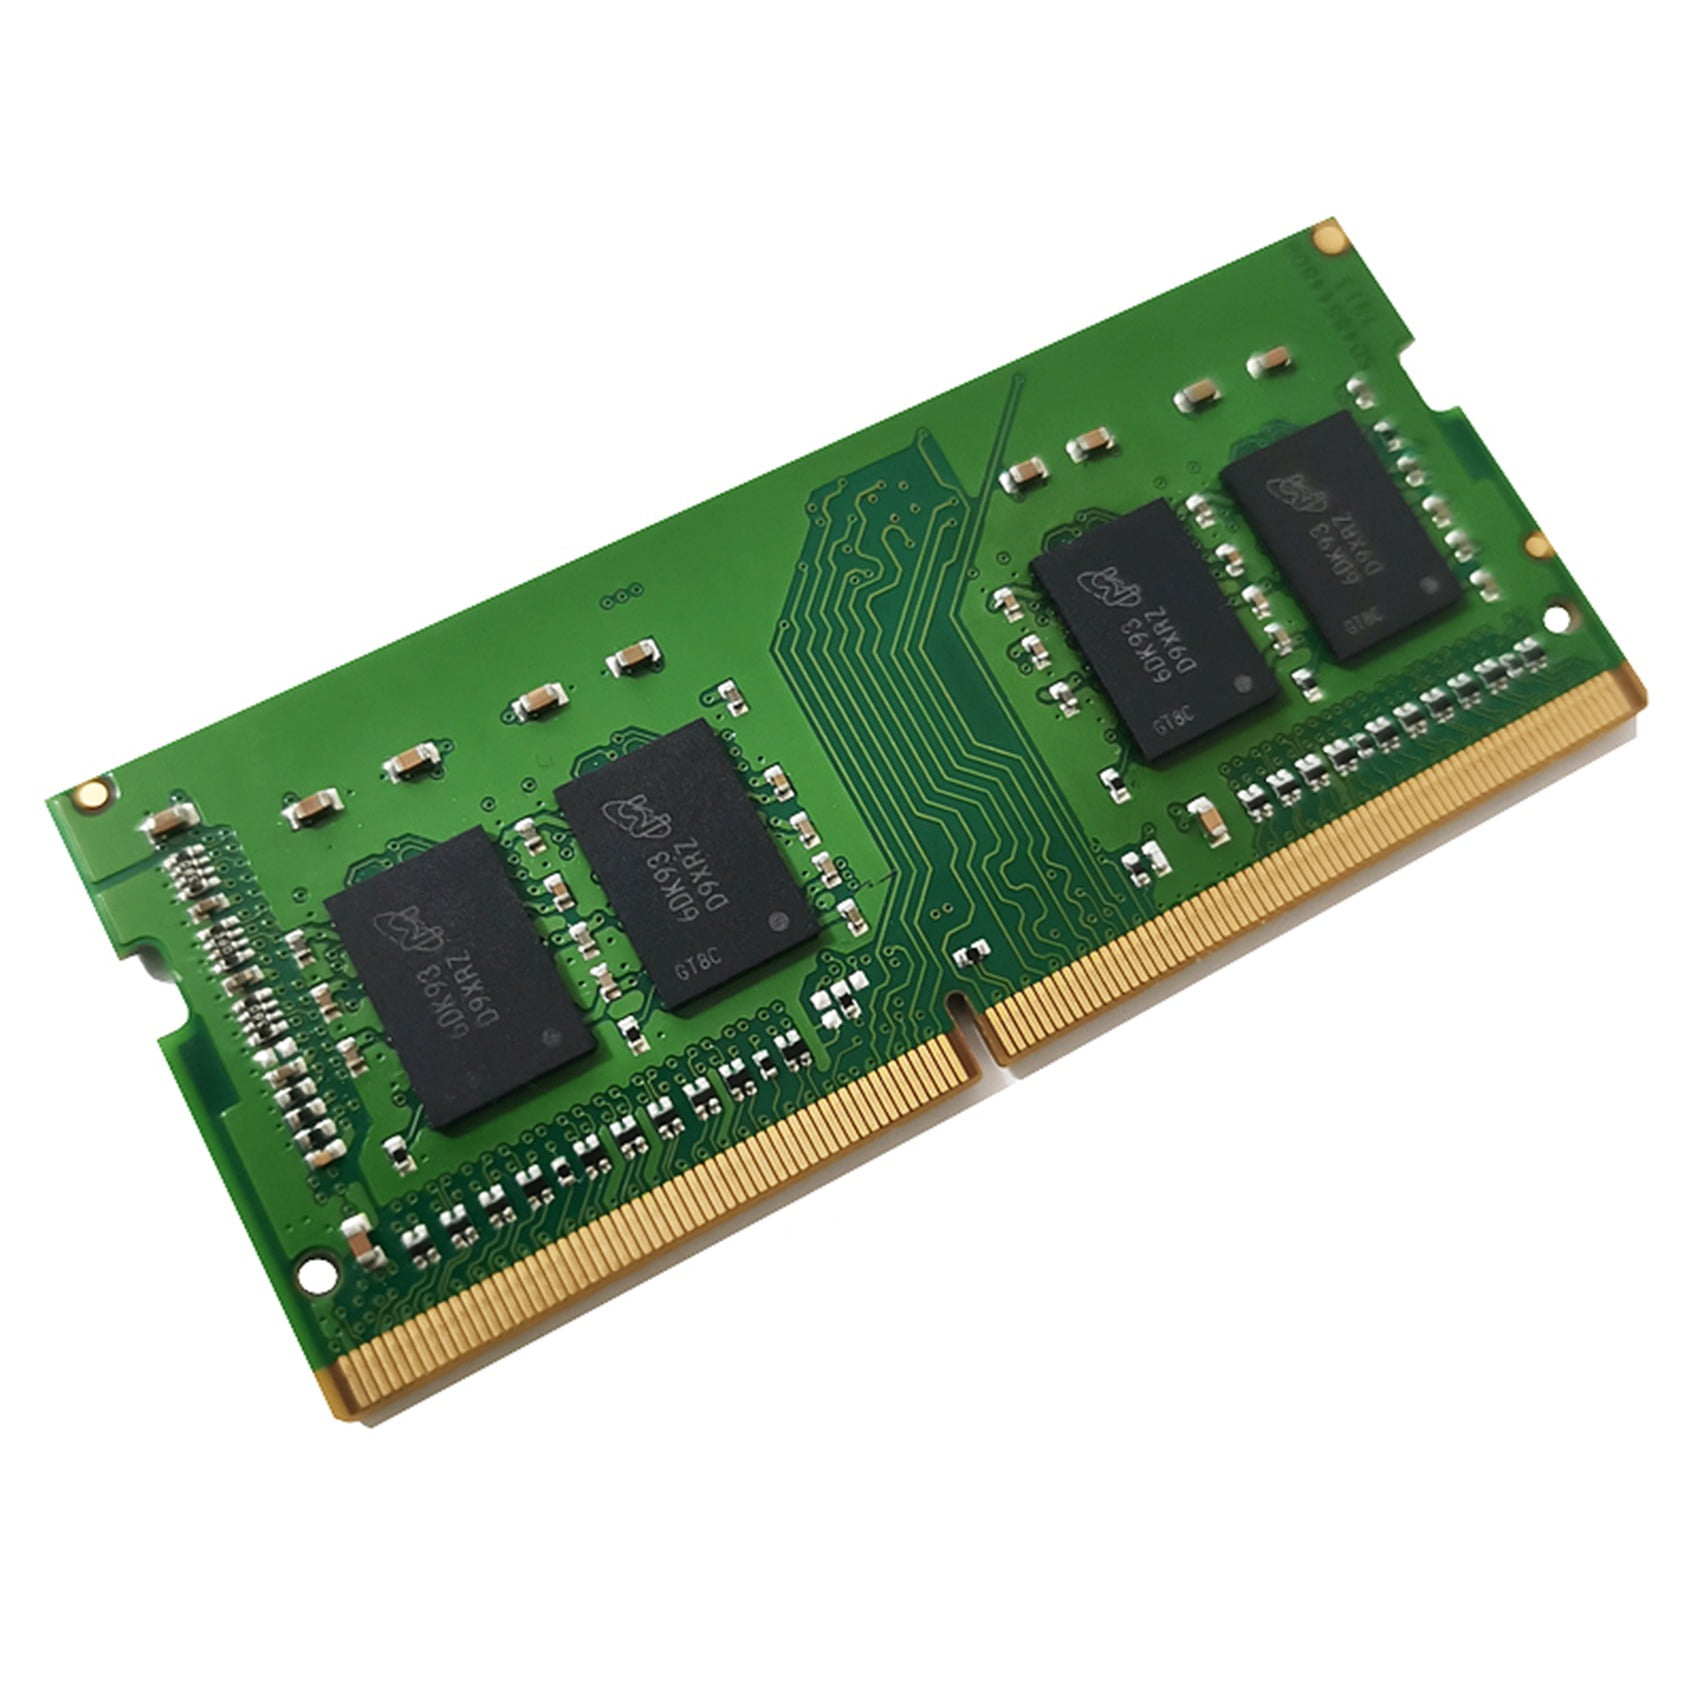 Touhou artilleri feudale DDR4 8GB 2133MHz RAM Memory PC4-17000 1.2V Memory 260 Pin SODIMM RAM Memory  for Laptop Computer - Walmart.com